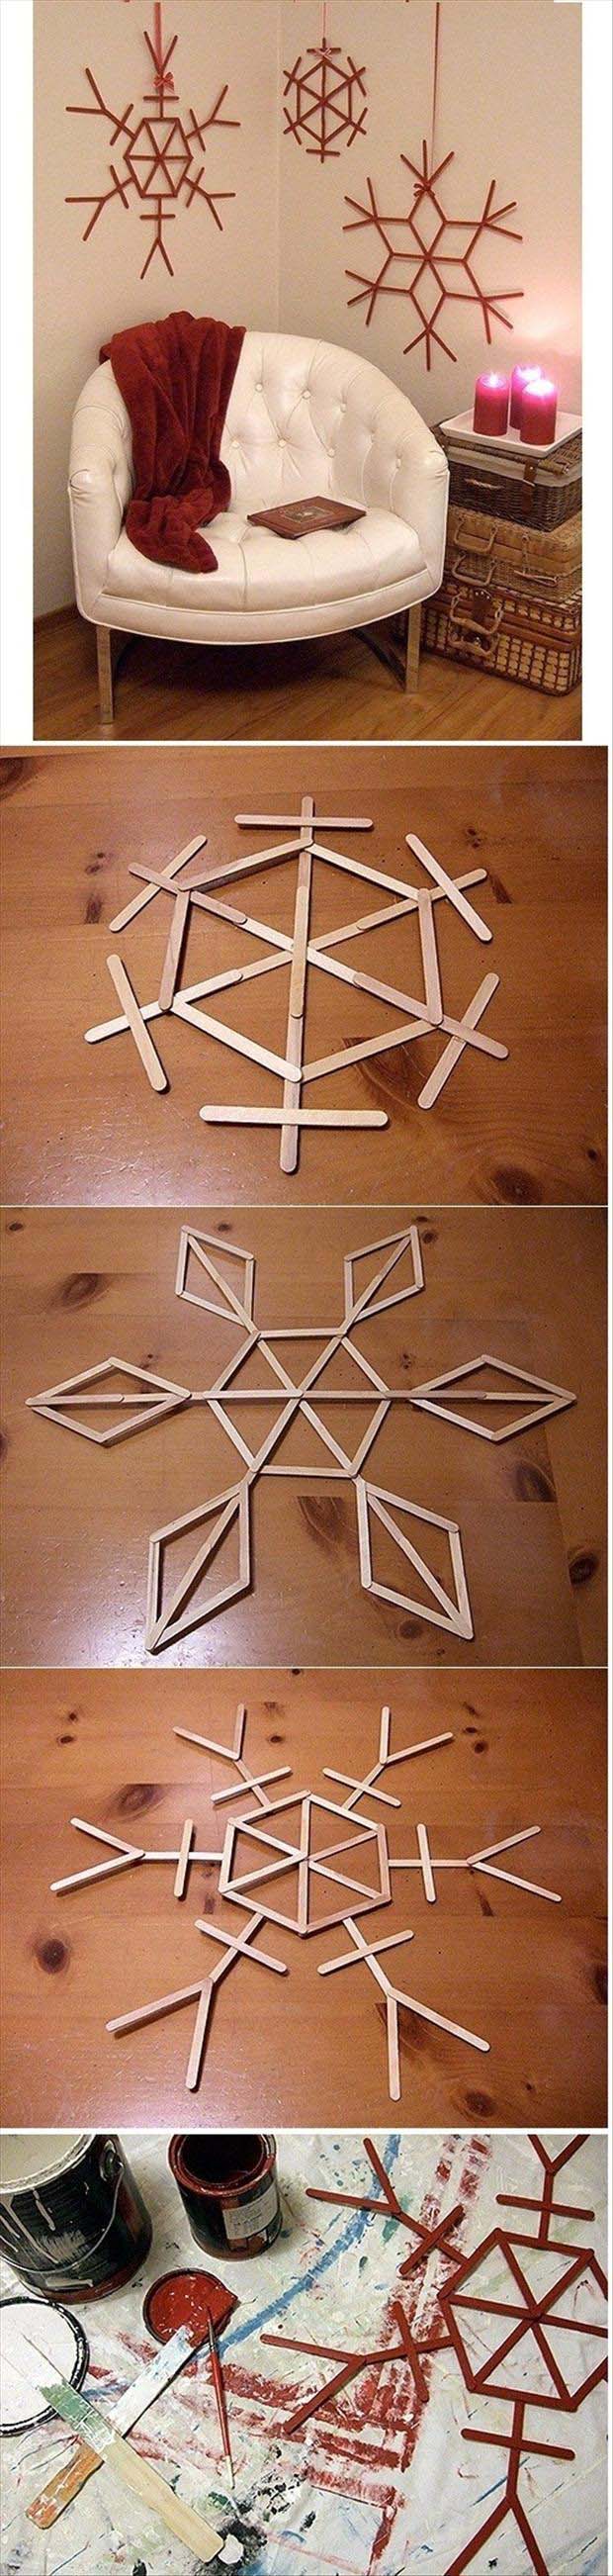 Ice Cream Stick Snowflakes #Christmas #walldecor #diy #decorhomeideas